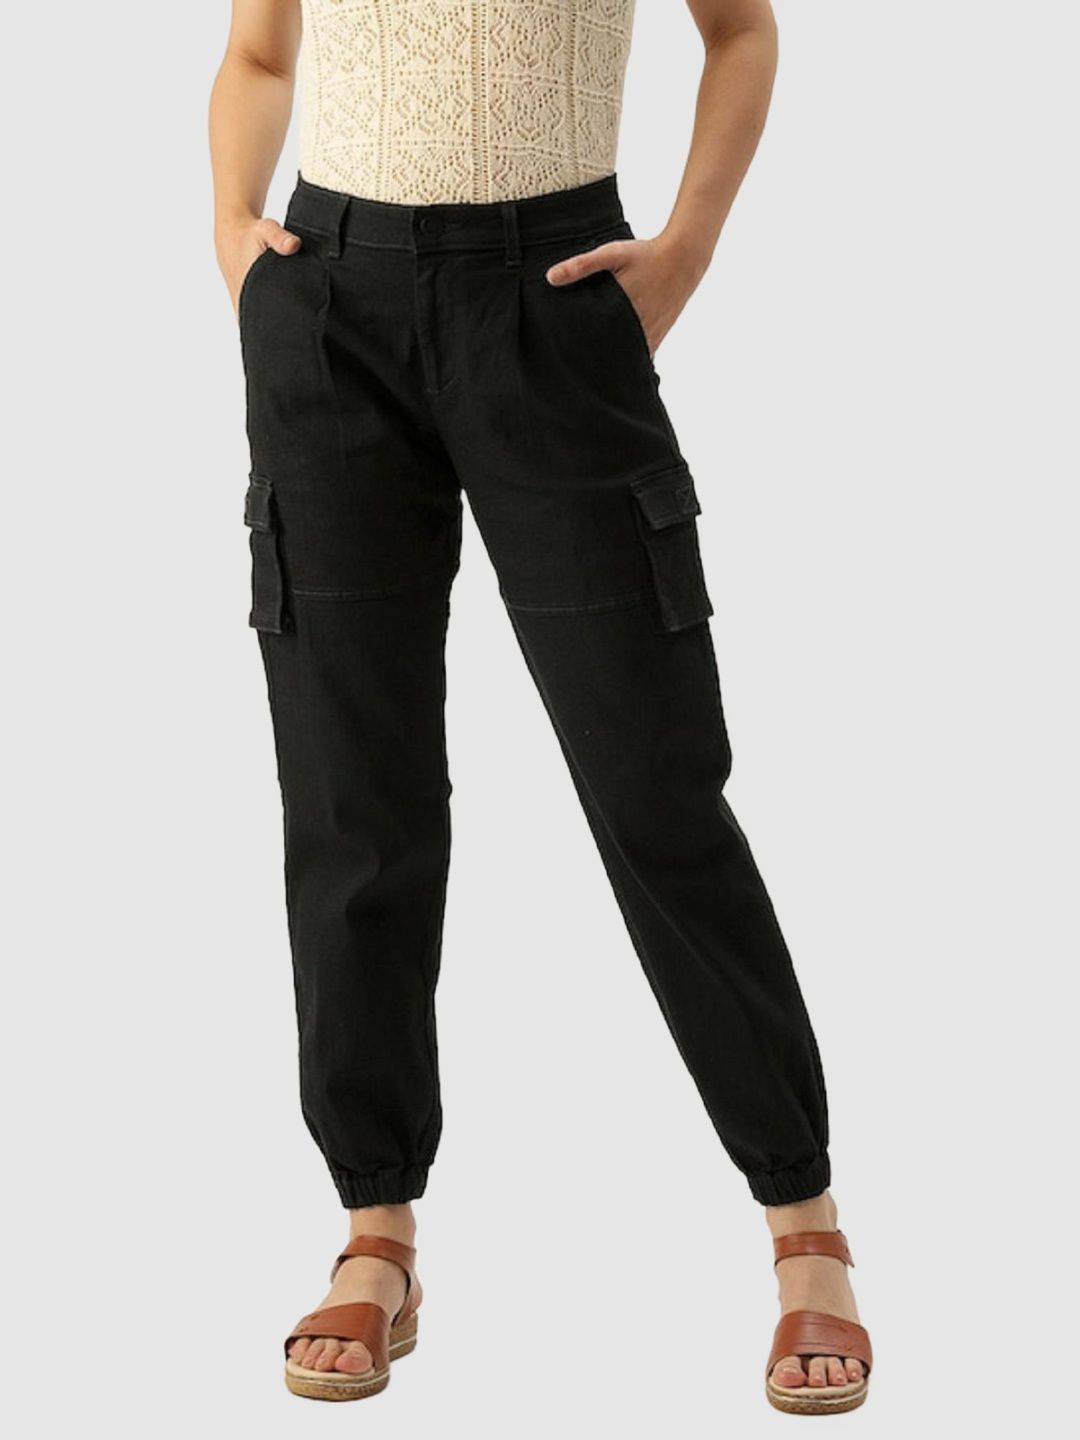     			IVOC - Black Cotton Blend Jogger Women's Jeans ( Pack of 1 )